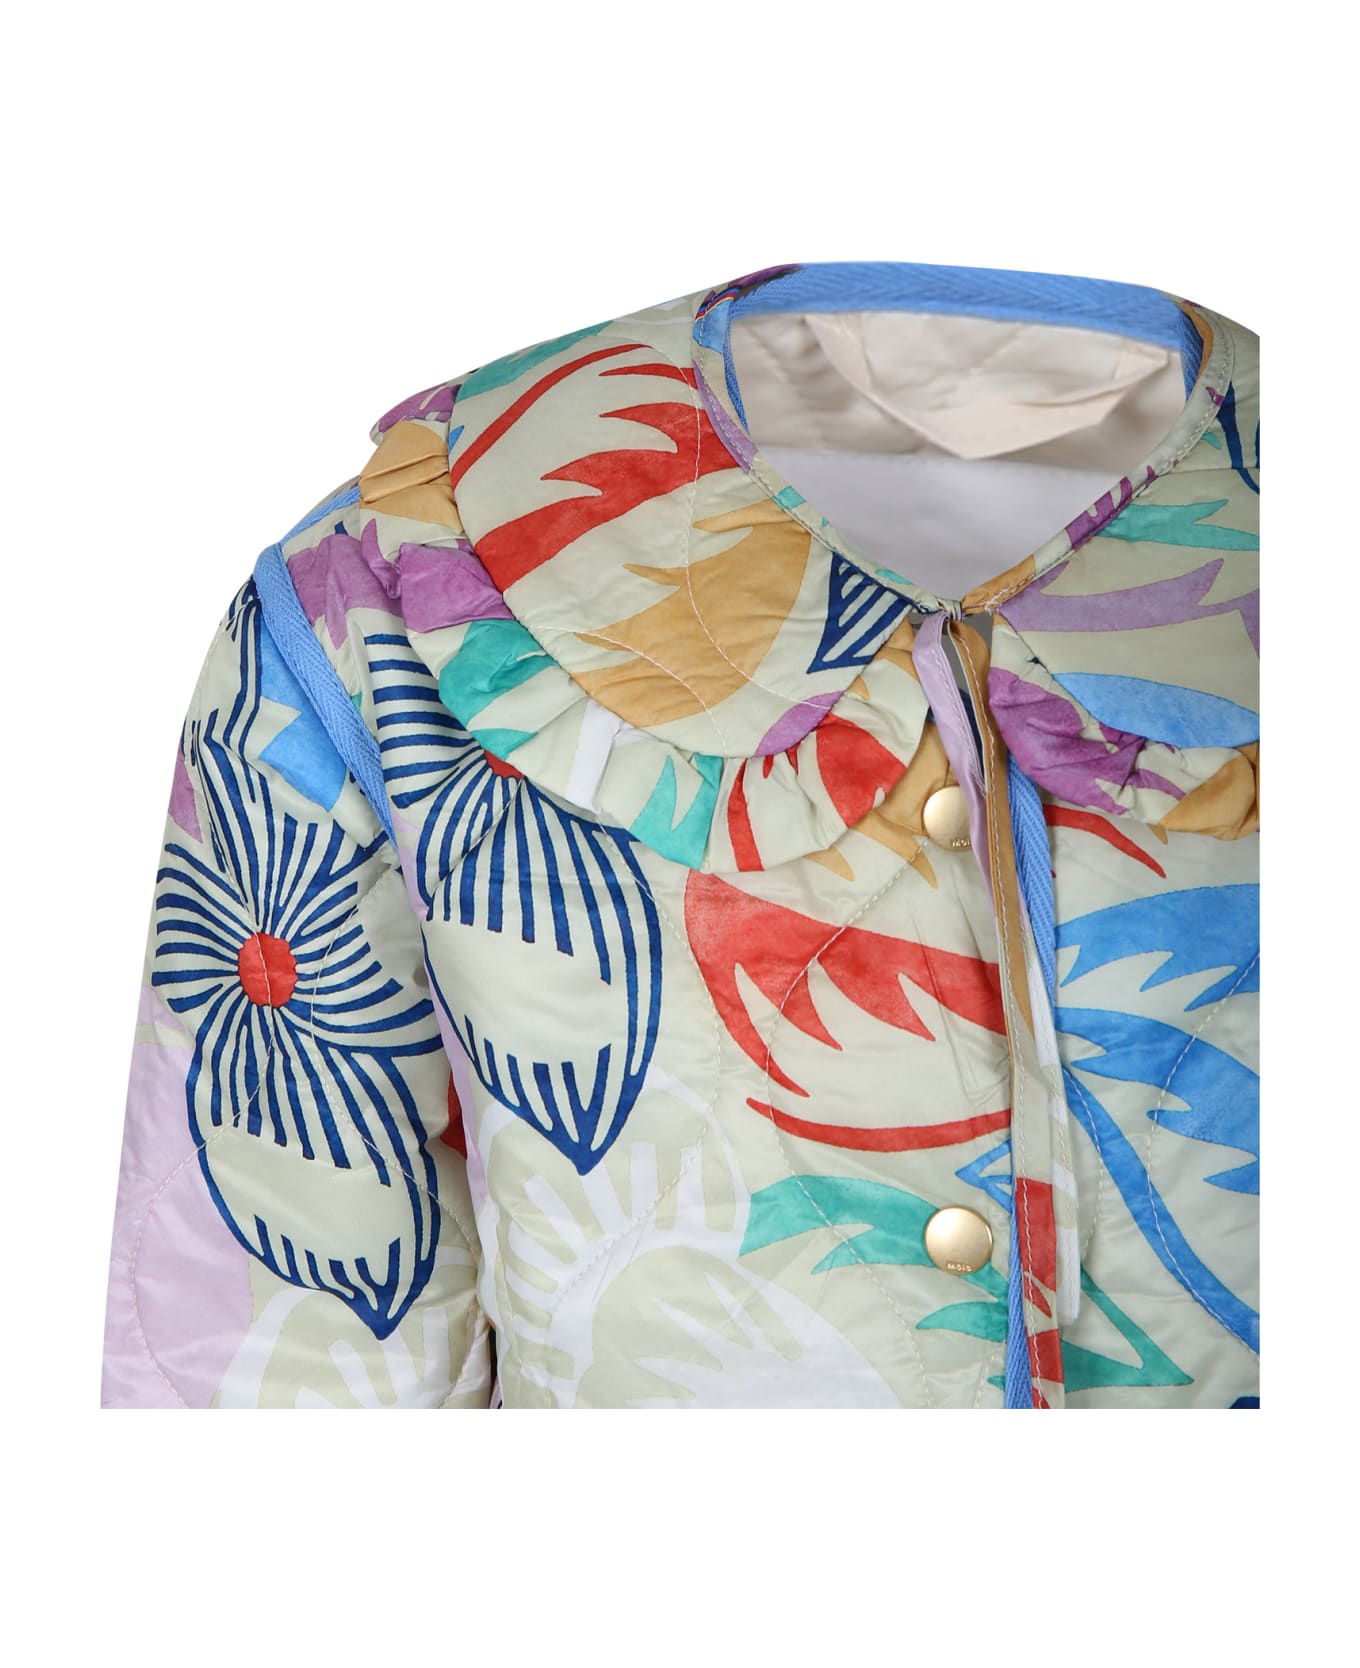 Molo Multicolor Down Jacket For Girl - Multicolor